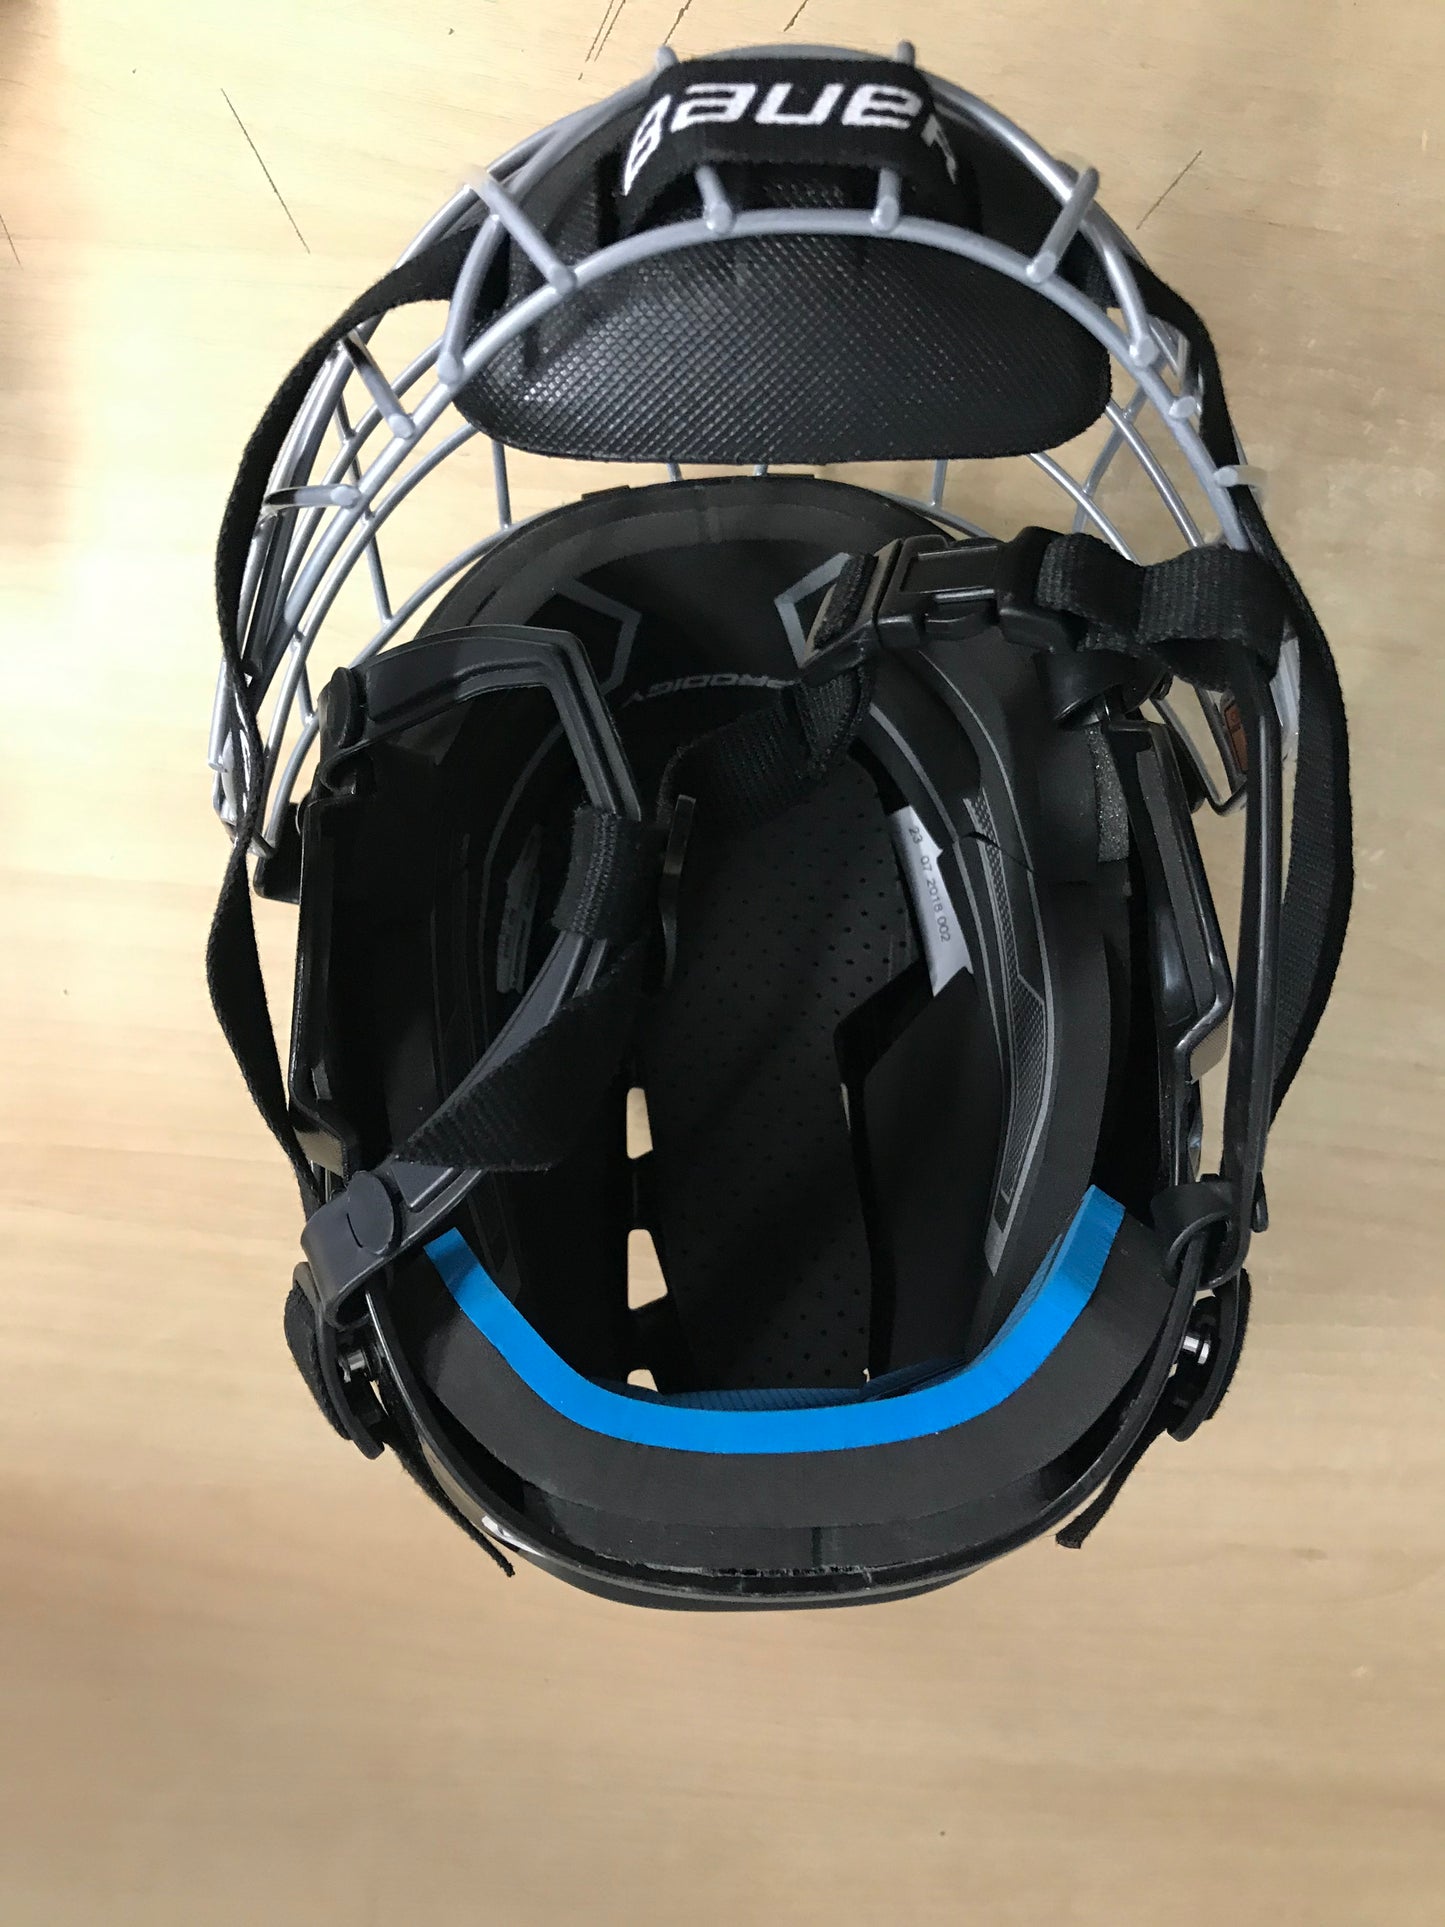 Hockey Helmet Child Size Y Age 4-6 6-6.5 inch Bauer Prodegy As New Expires Dec 2025